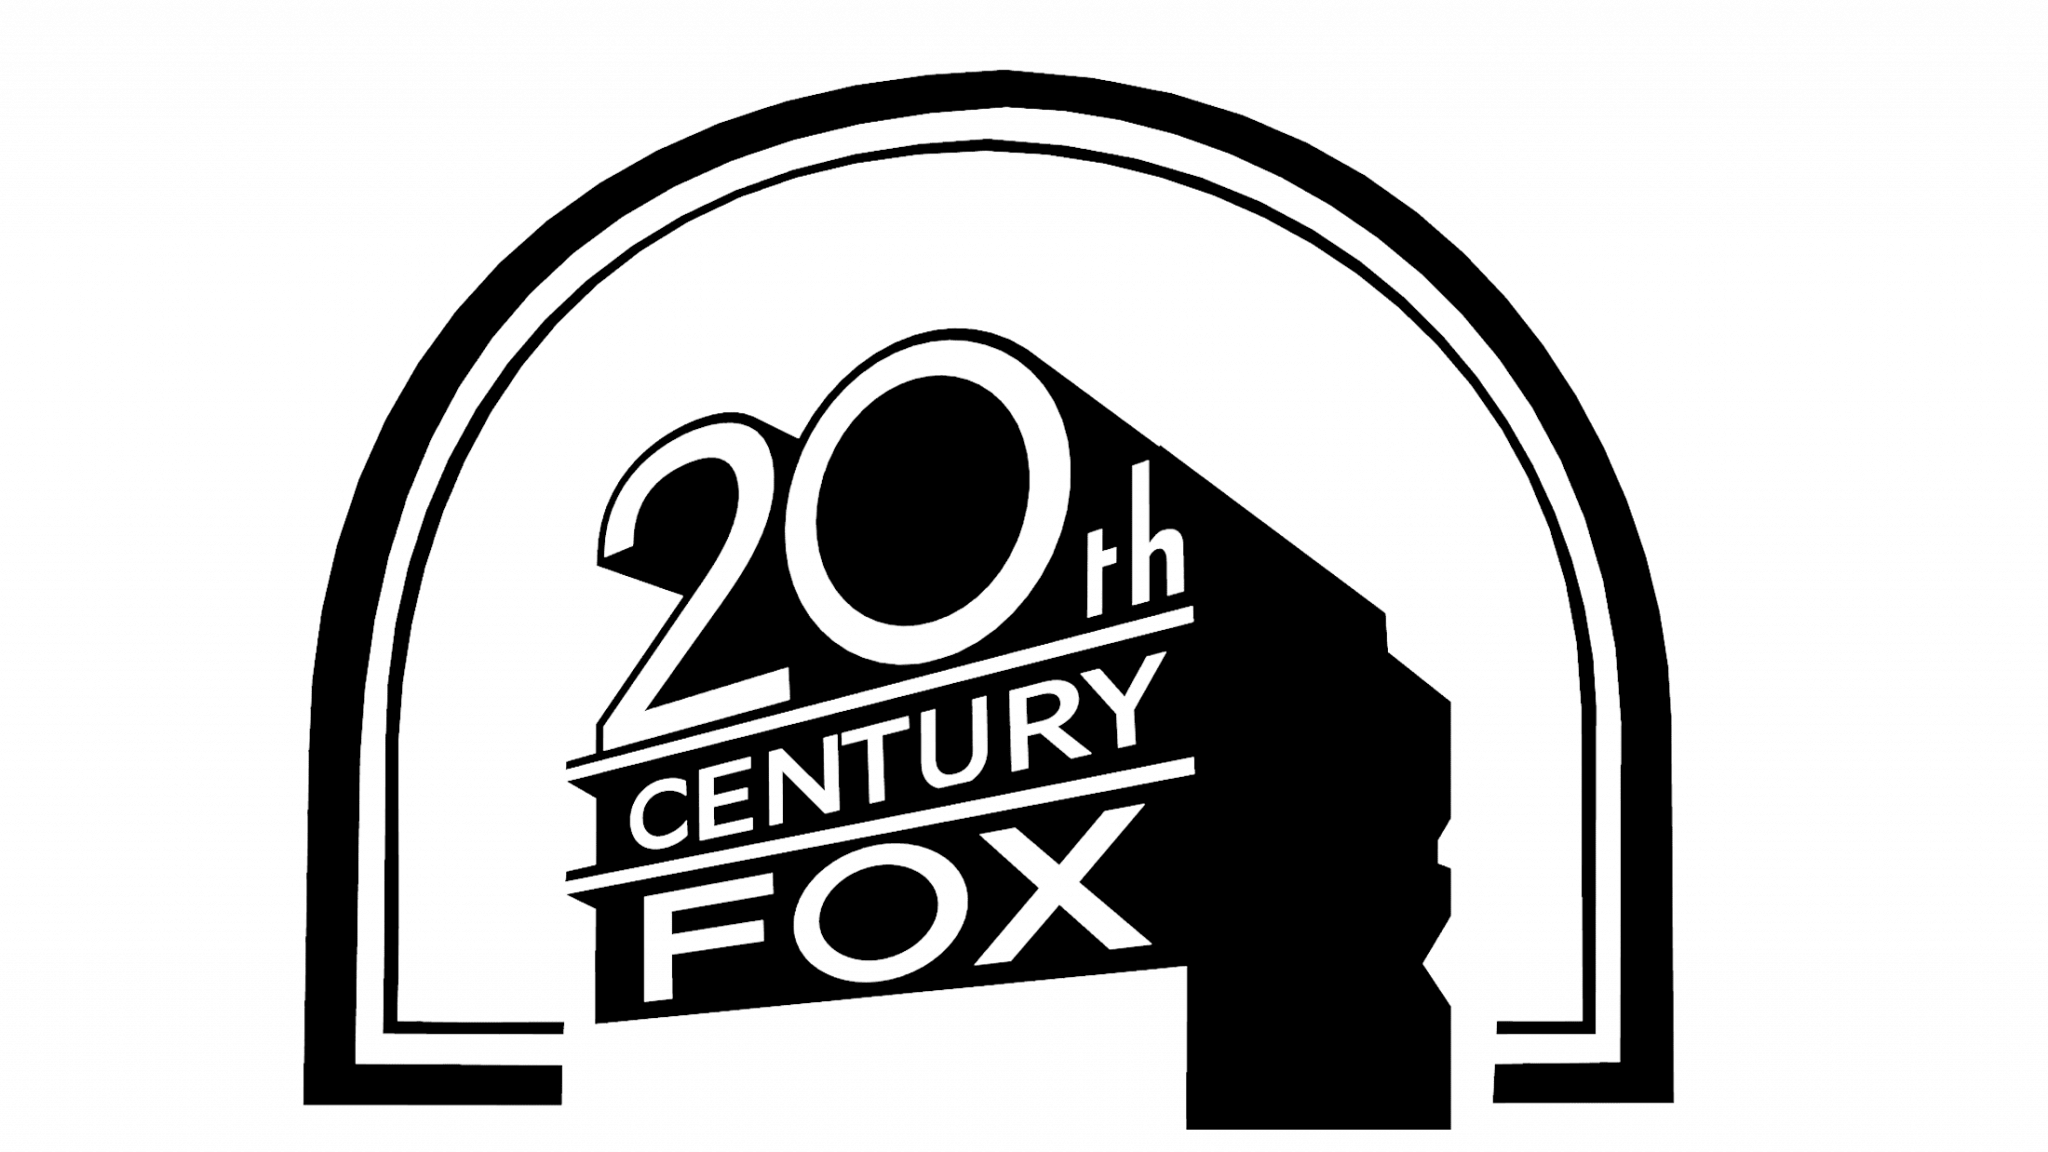 Twenty century fox заставка